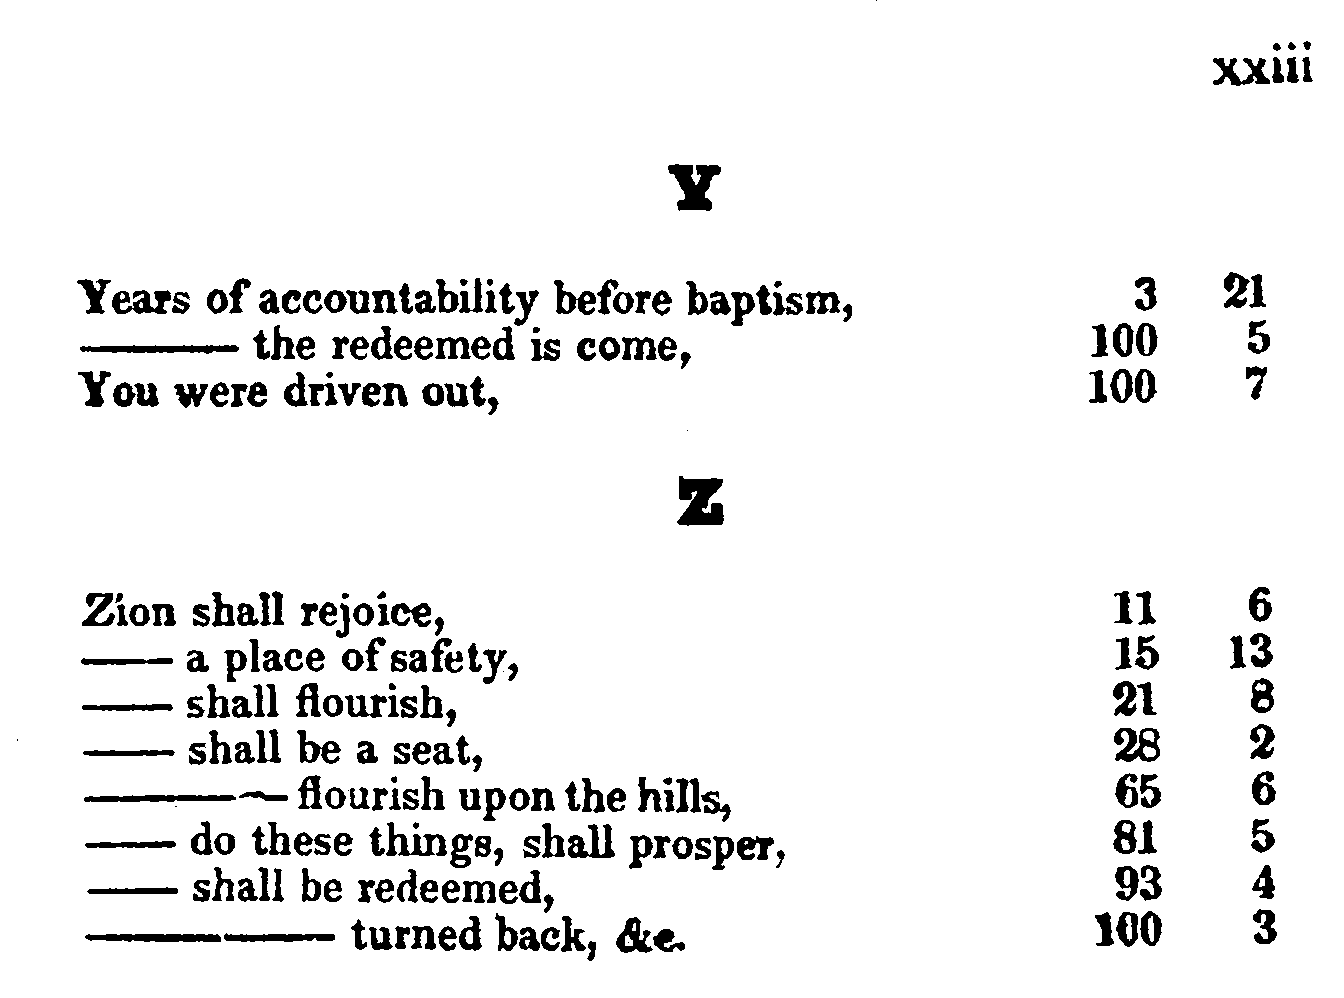 Doctrine And Covenants Index XXIII